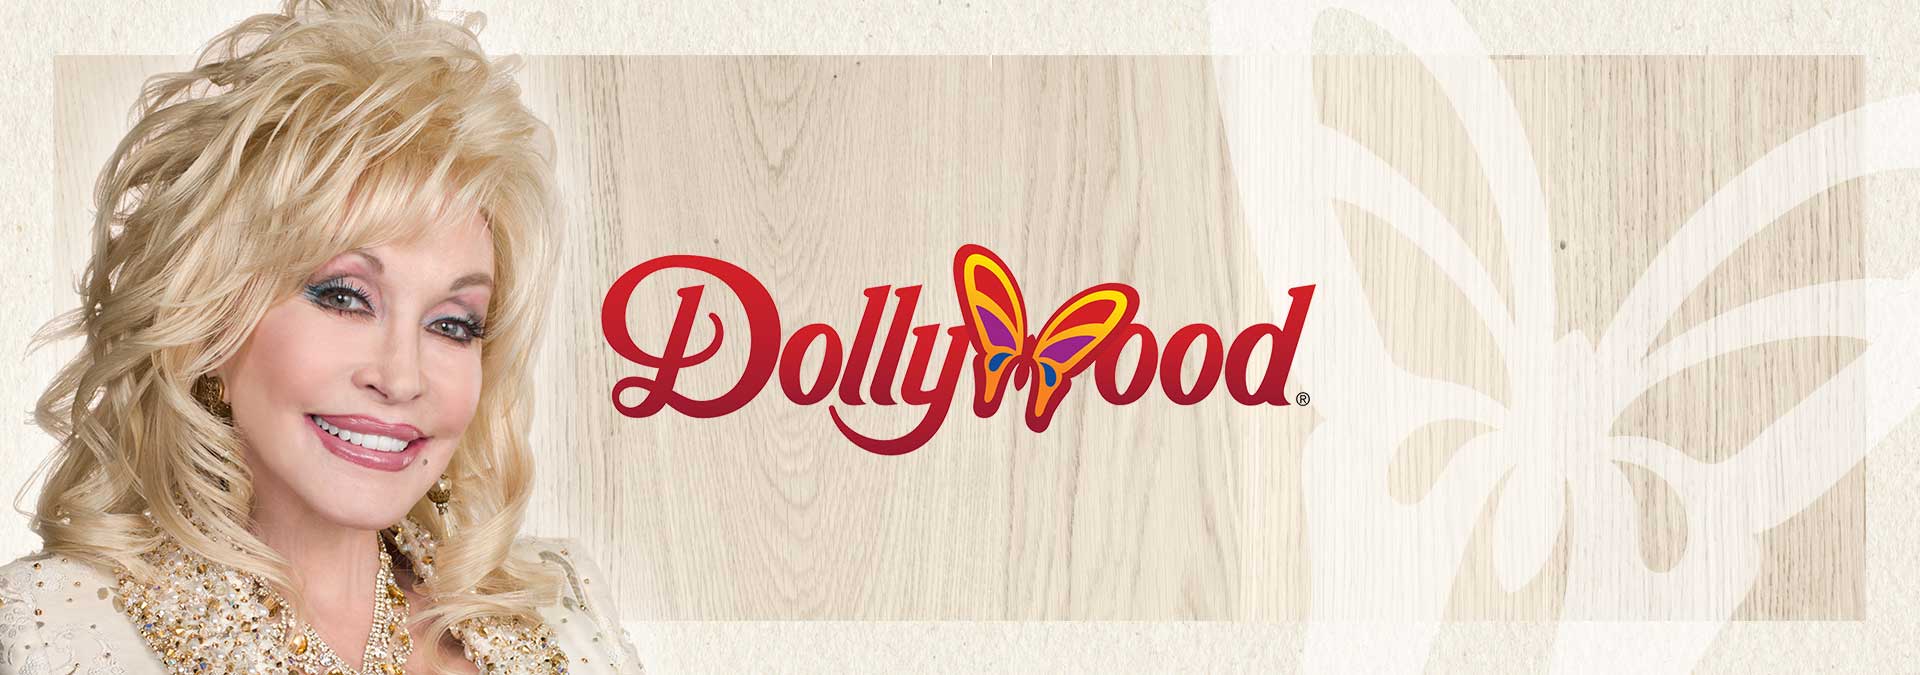 Dolly Parton's Dollywood Theme Park in the Smokies